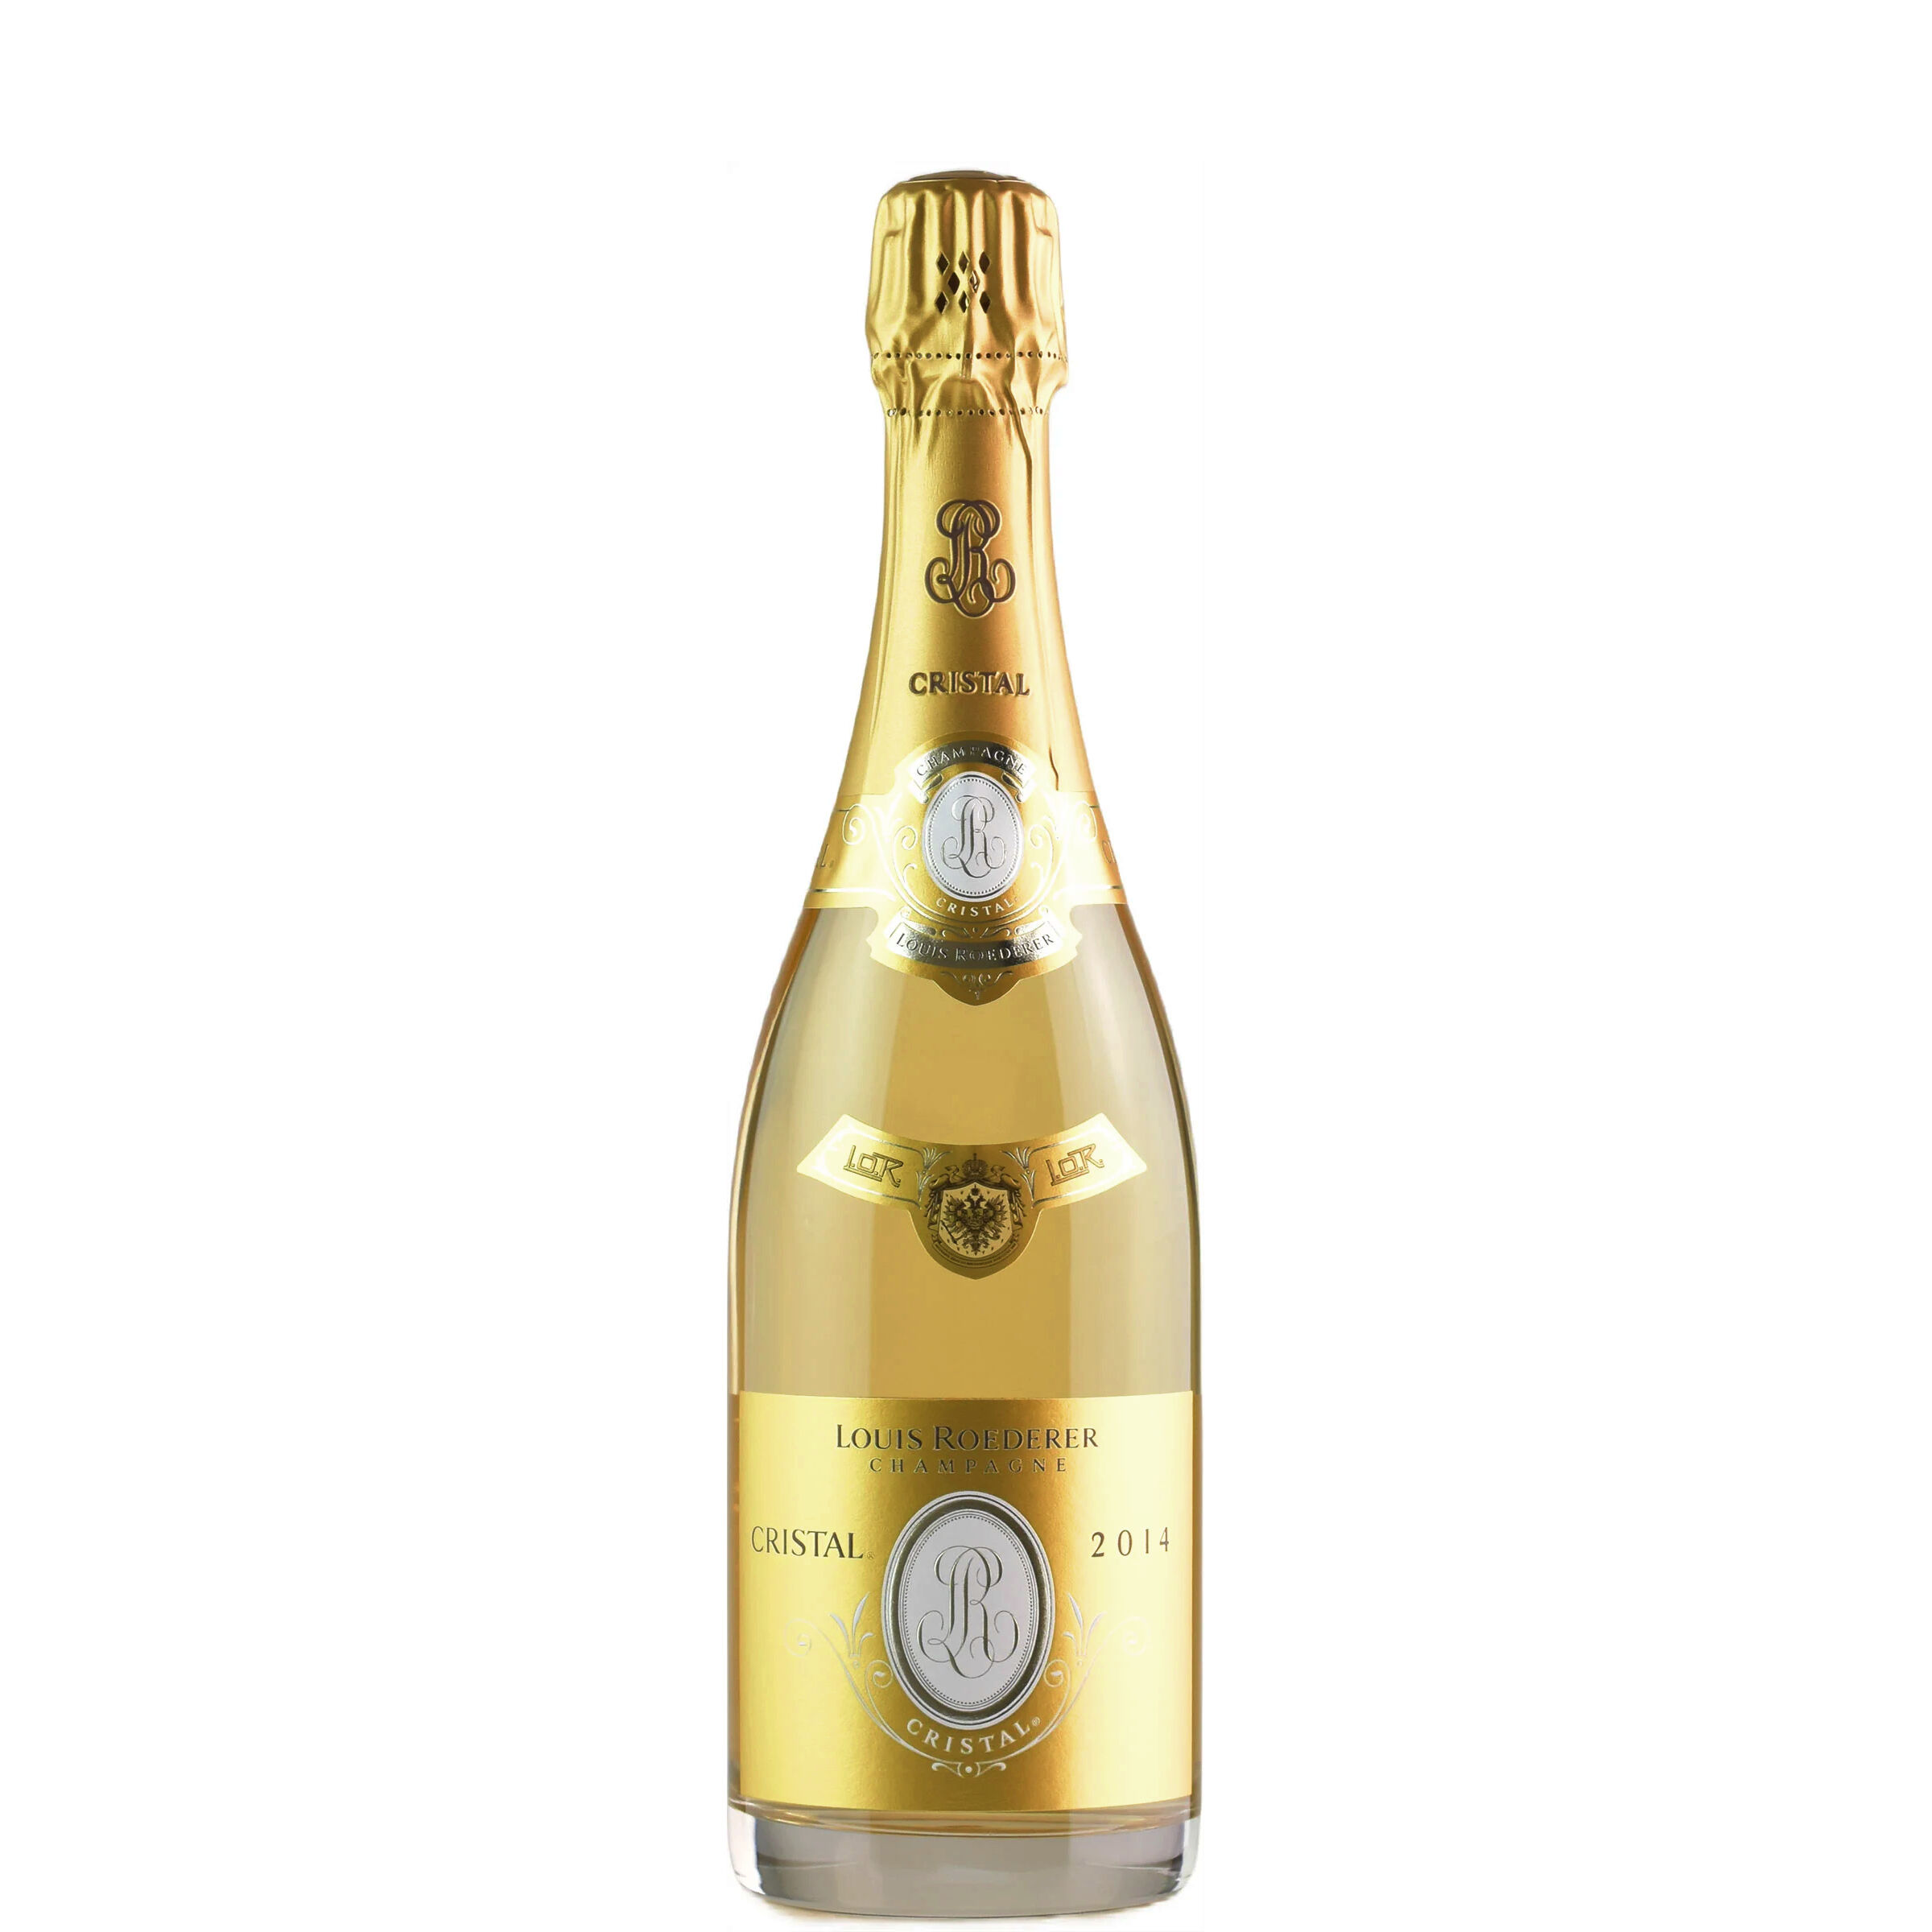 Laciviltadelbere Champagne Brut Millesime "Cristal" Magnum 2012 (Astucciato) Louis Roederer